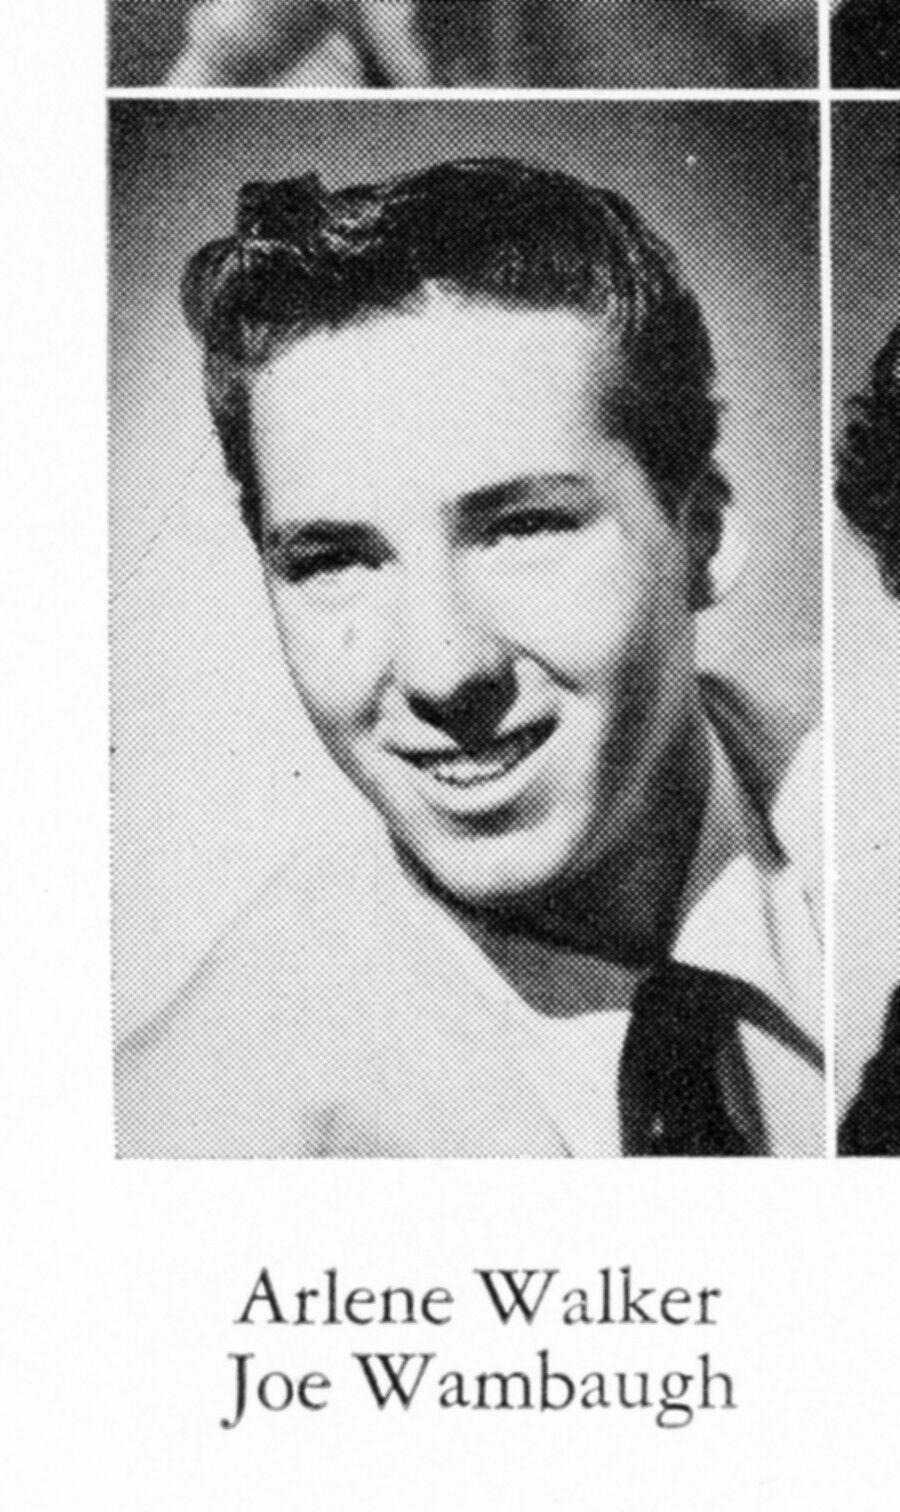 JOSEPH WAMBAUGH 1954 Chaffey Union High School Yearbook